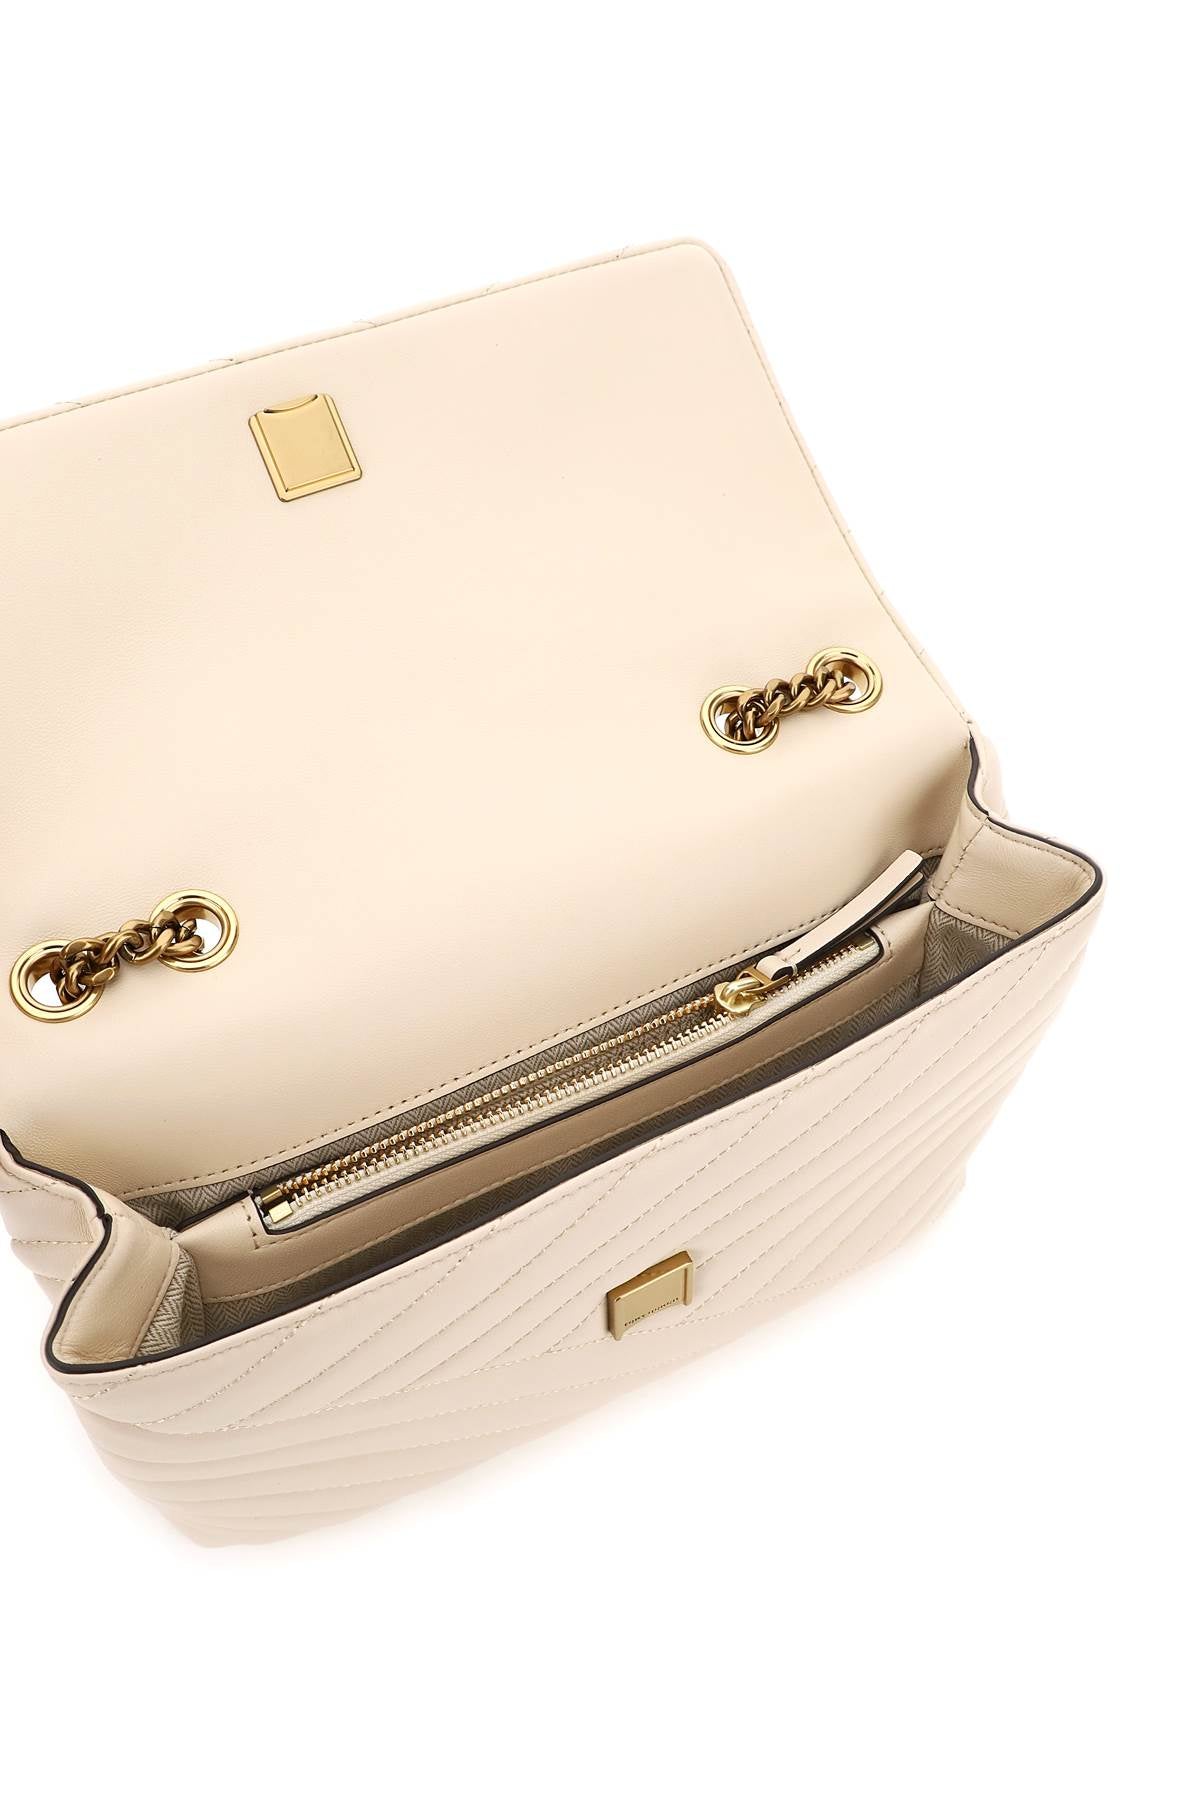 TORY BURCH KIRA LARGE SHOULDER Handbag